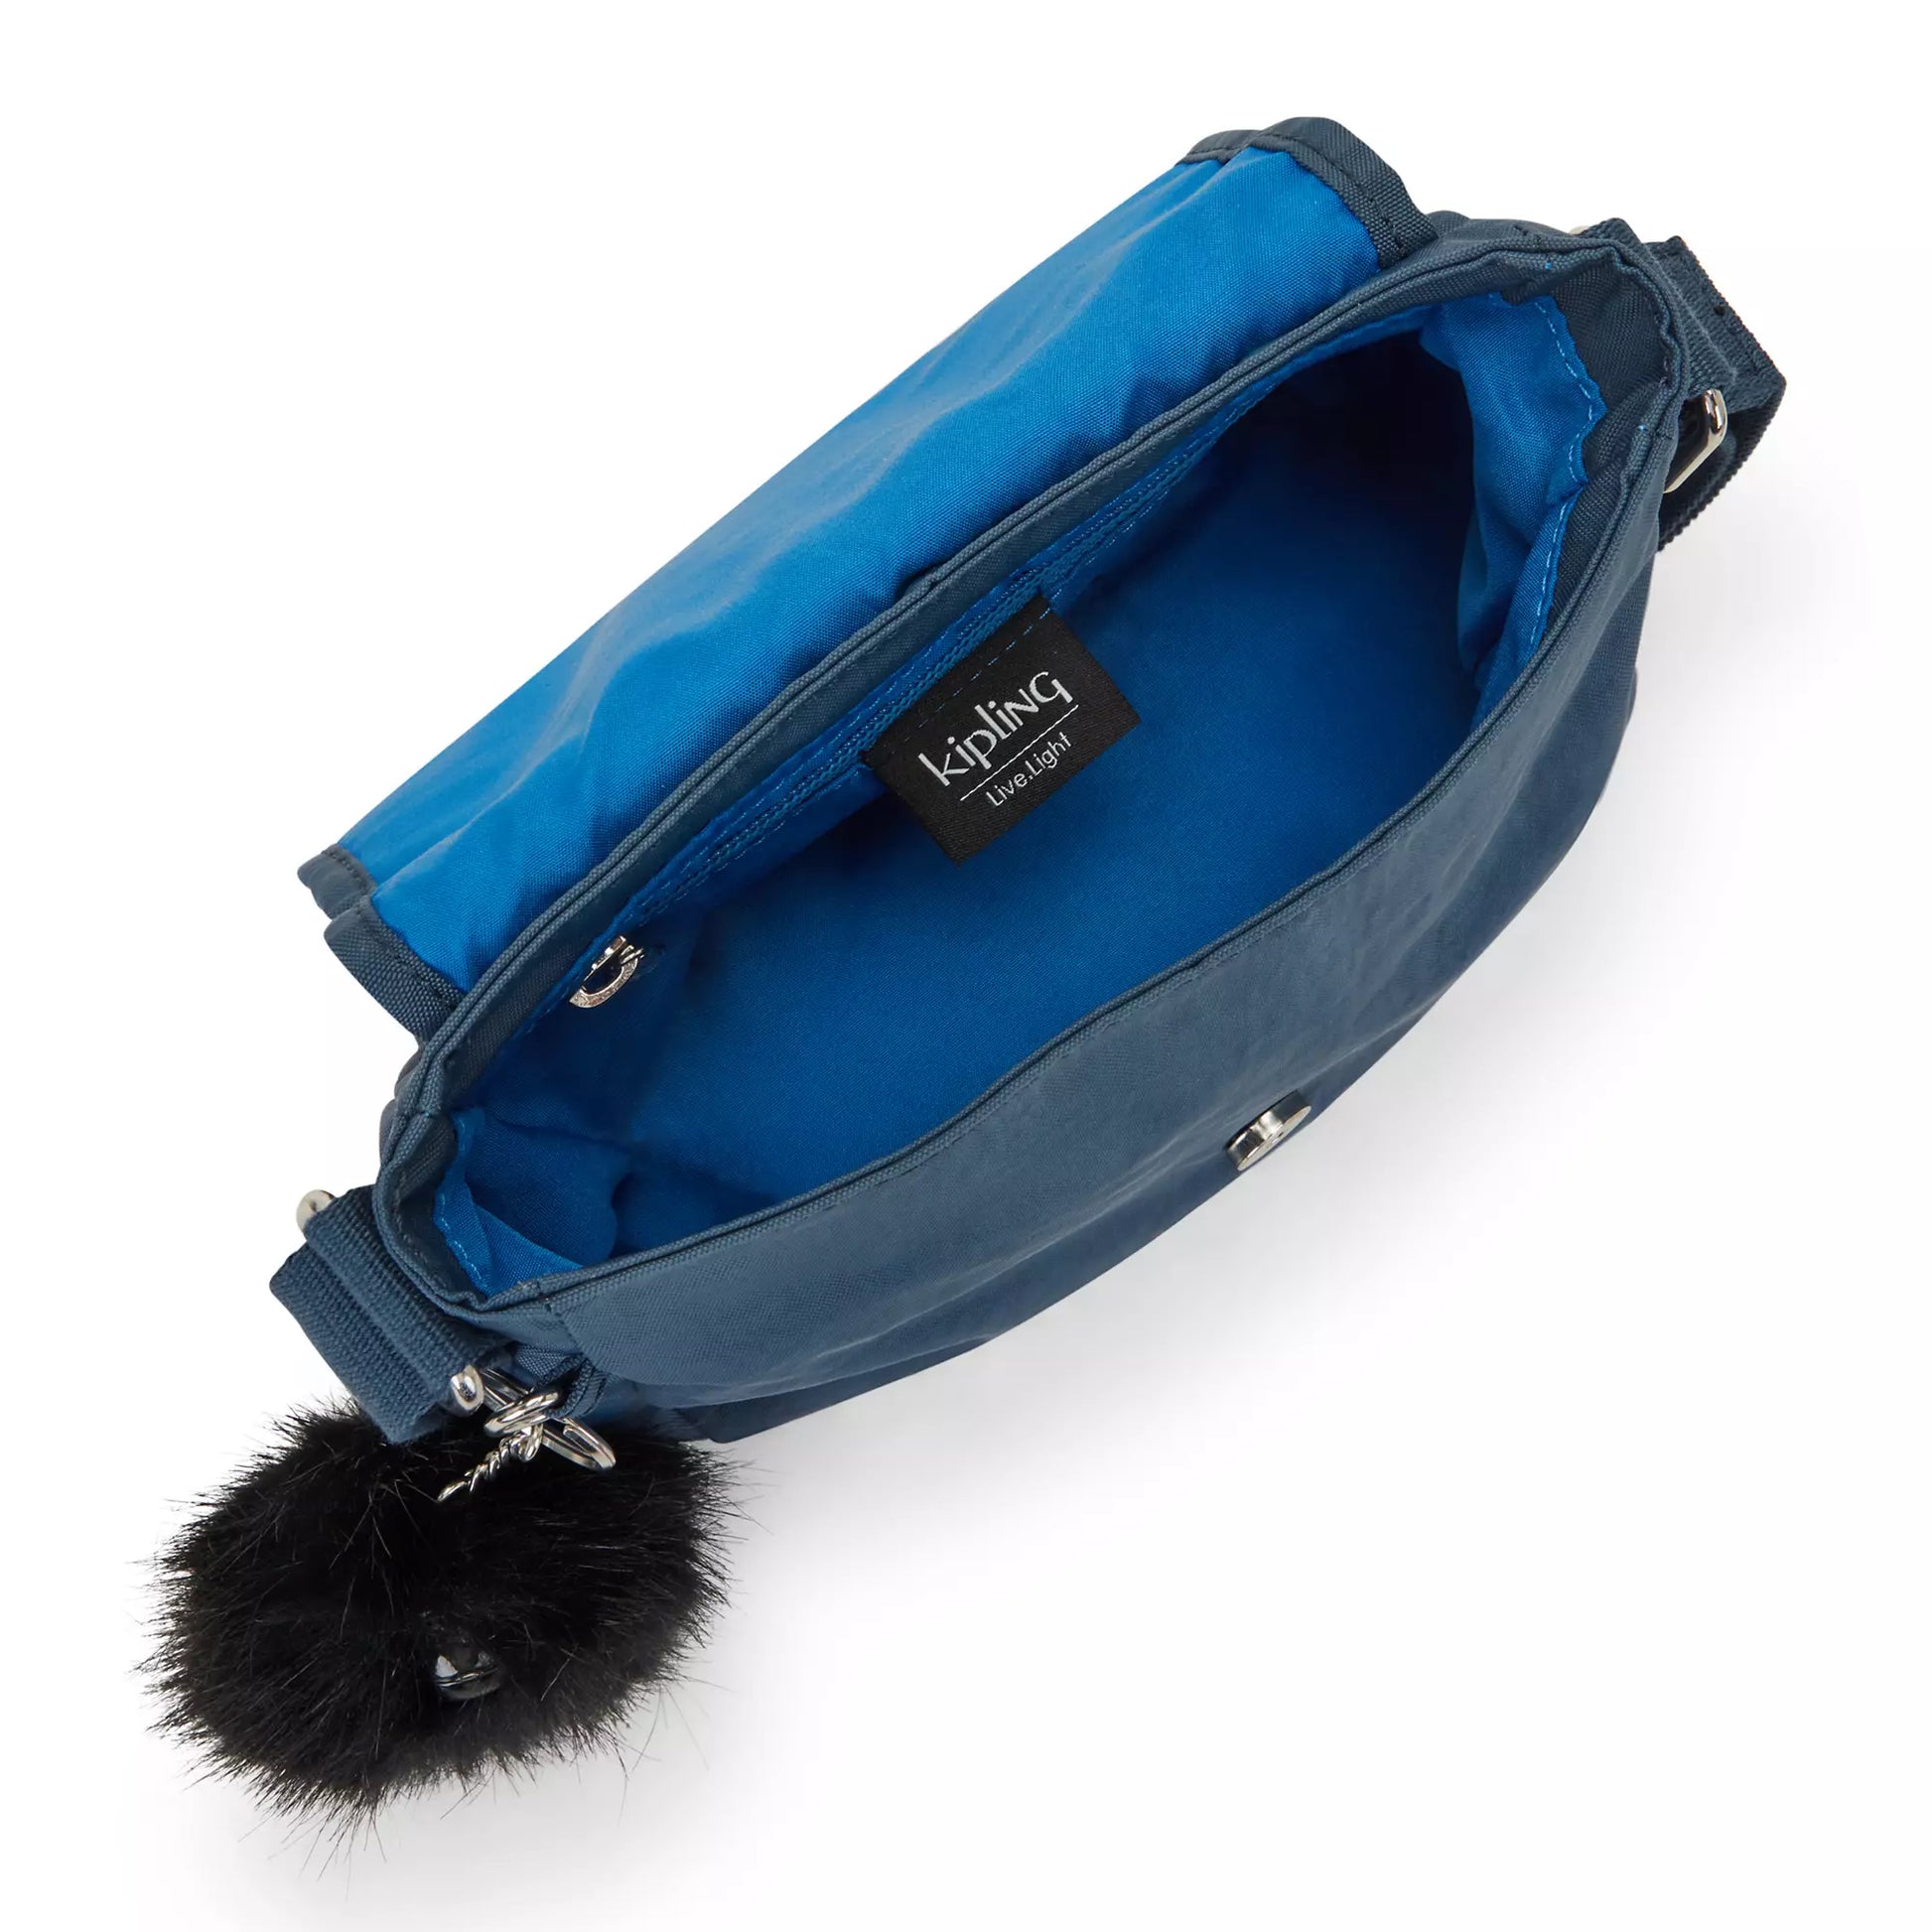 Kipling Sabian Crossbody Mini Bag - Blue Embrace GG